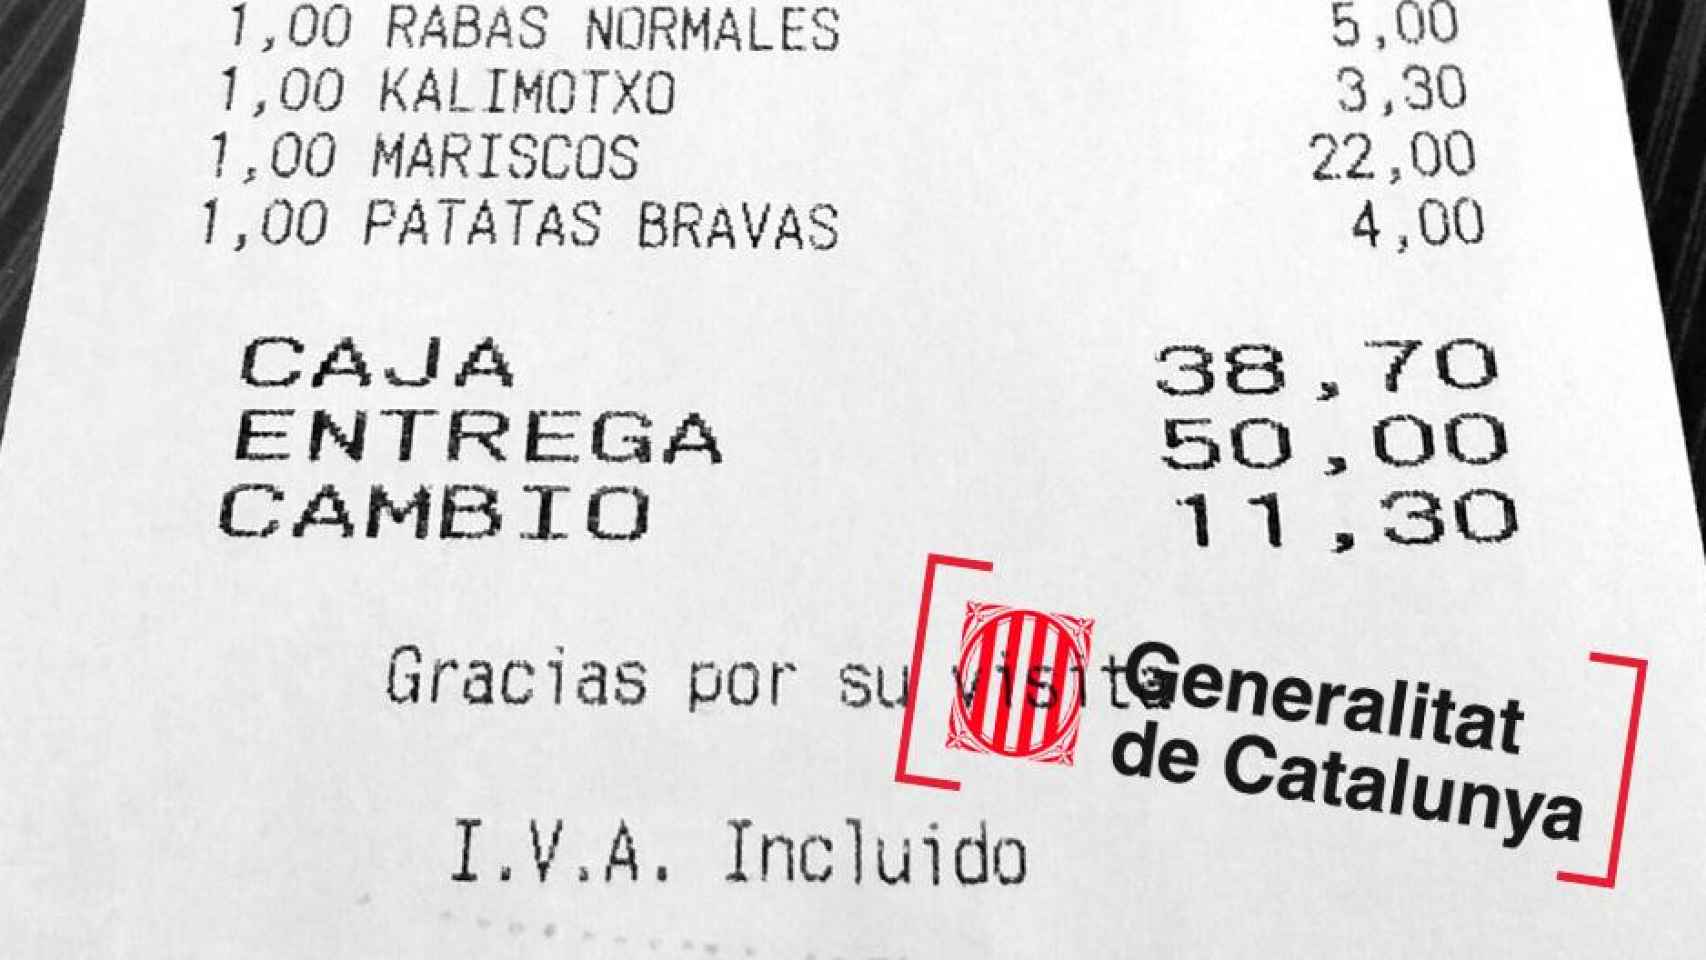 Factura de restaurante con un sello de la Generalitat de Cataluña / CG